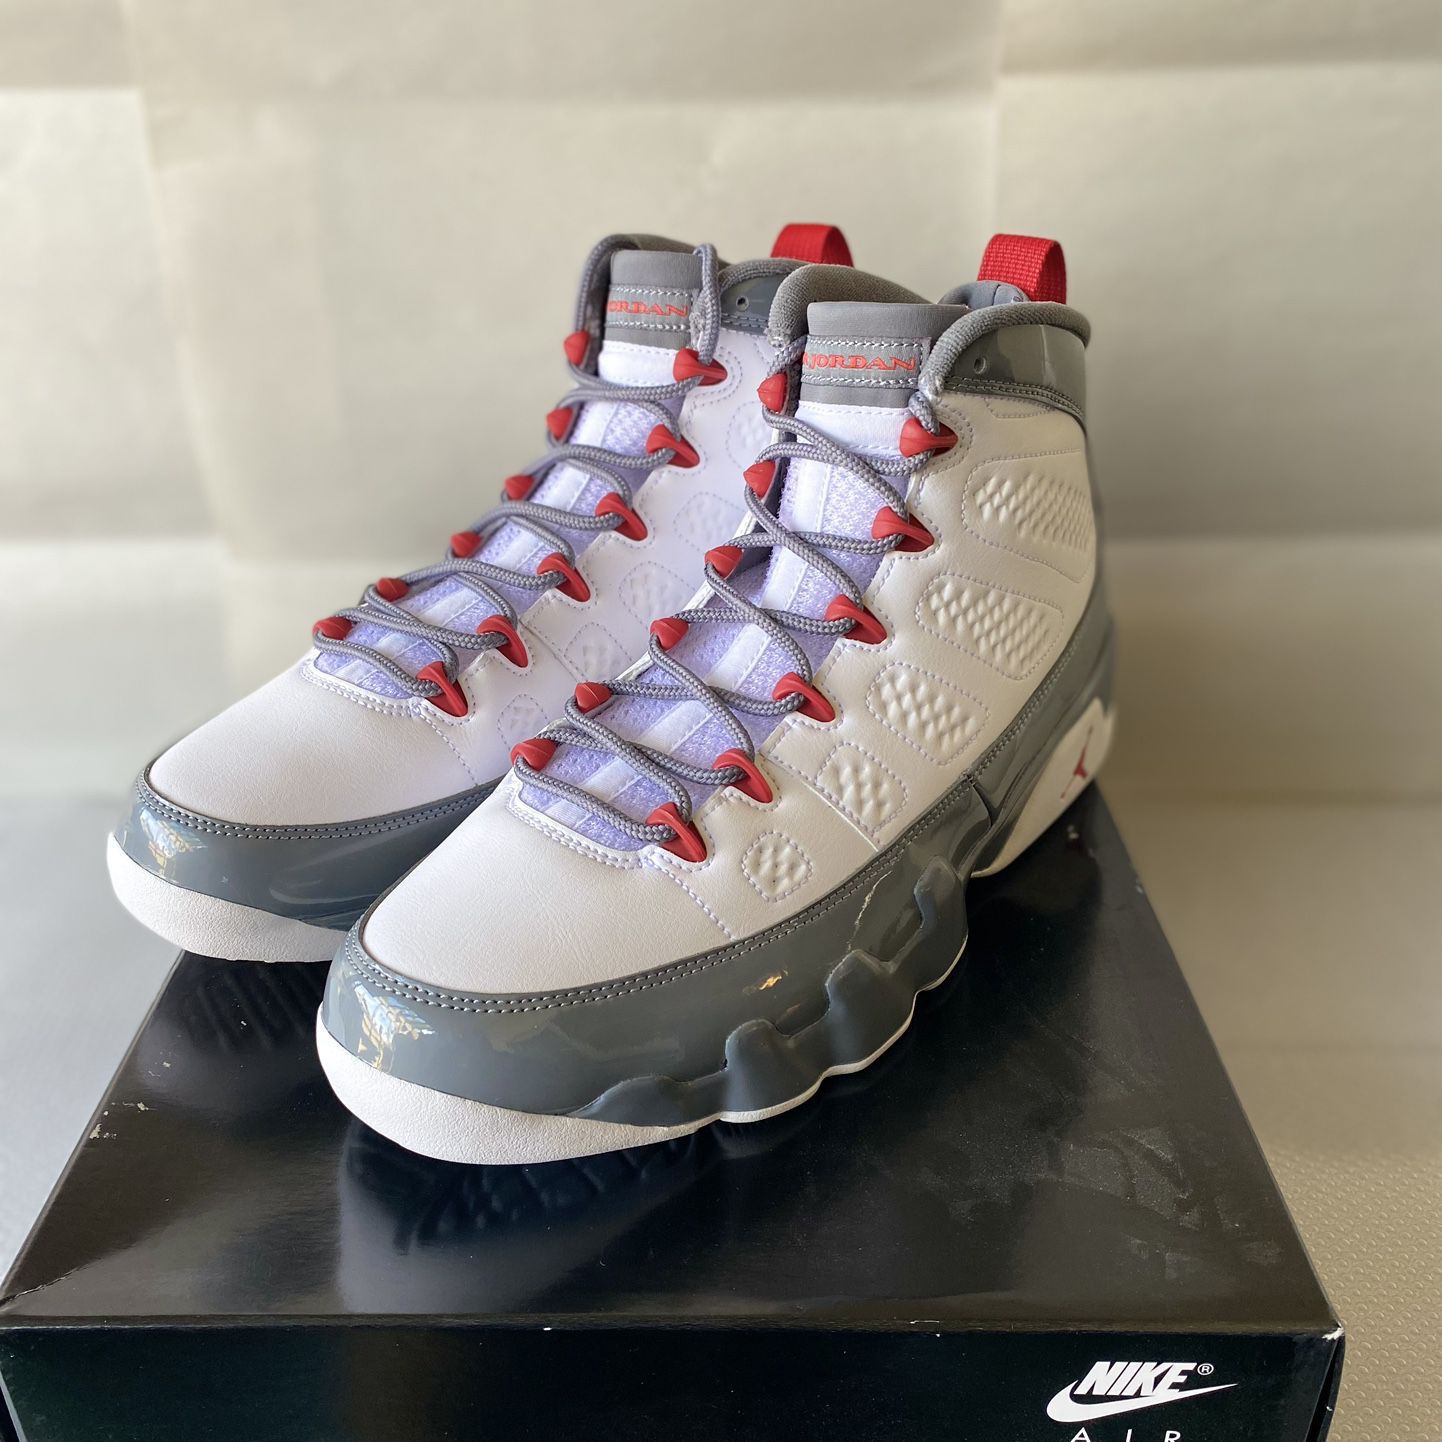 Nike Air Jordan 9 Retro White/Cool Grey Size 11